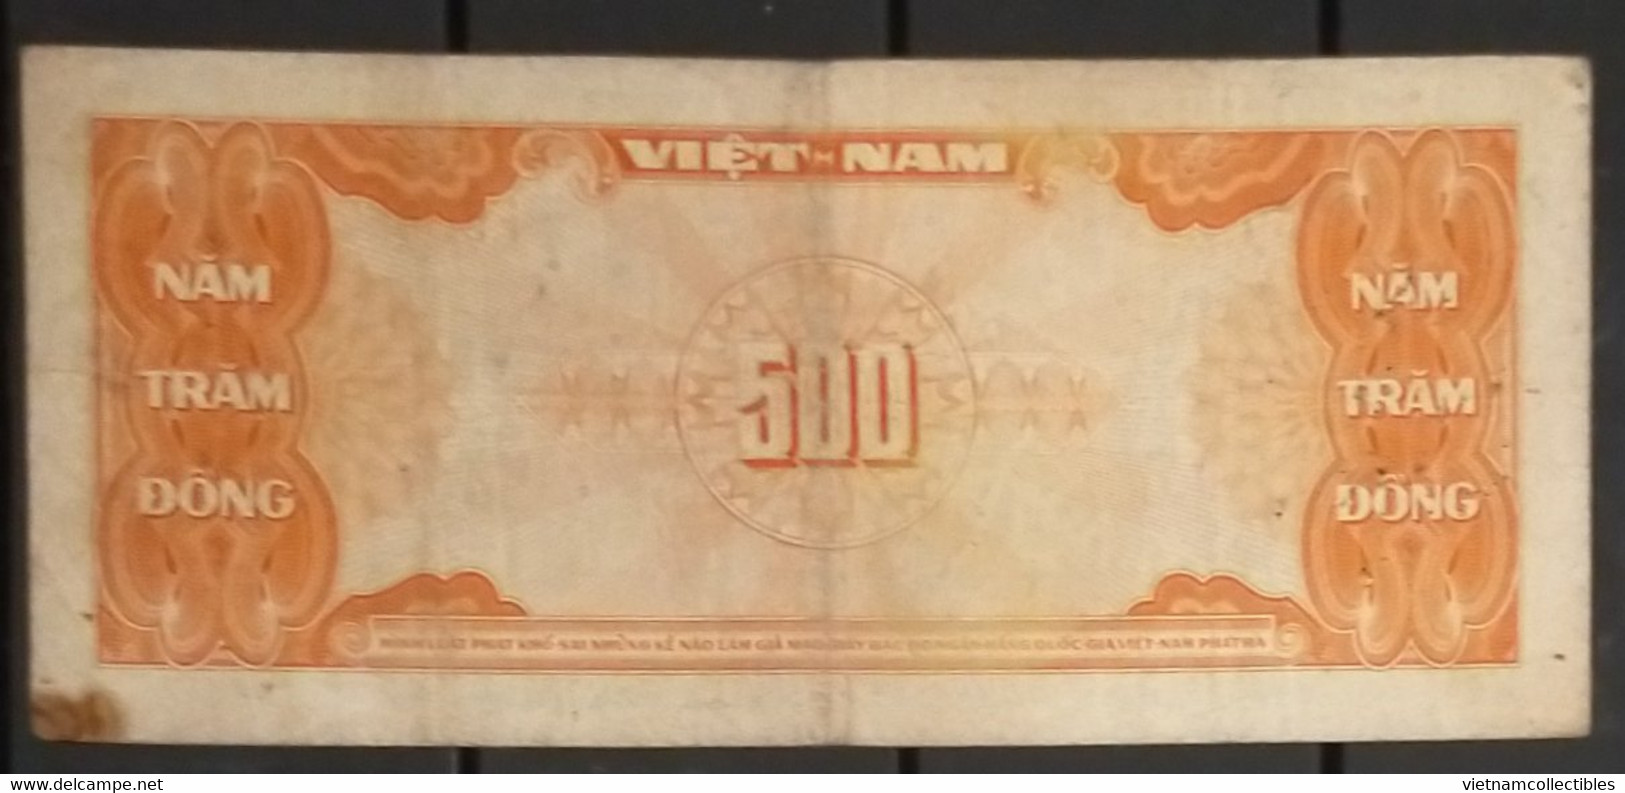 South Viet Nam Vietnam 500 Dông VF Thien Mu Pagoda Banknote Note 1955 -Pick # 10 / 2 Photo - Viêt-Nam